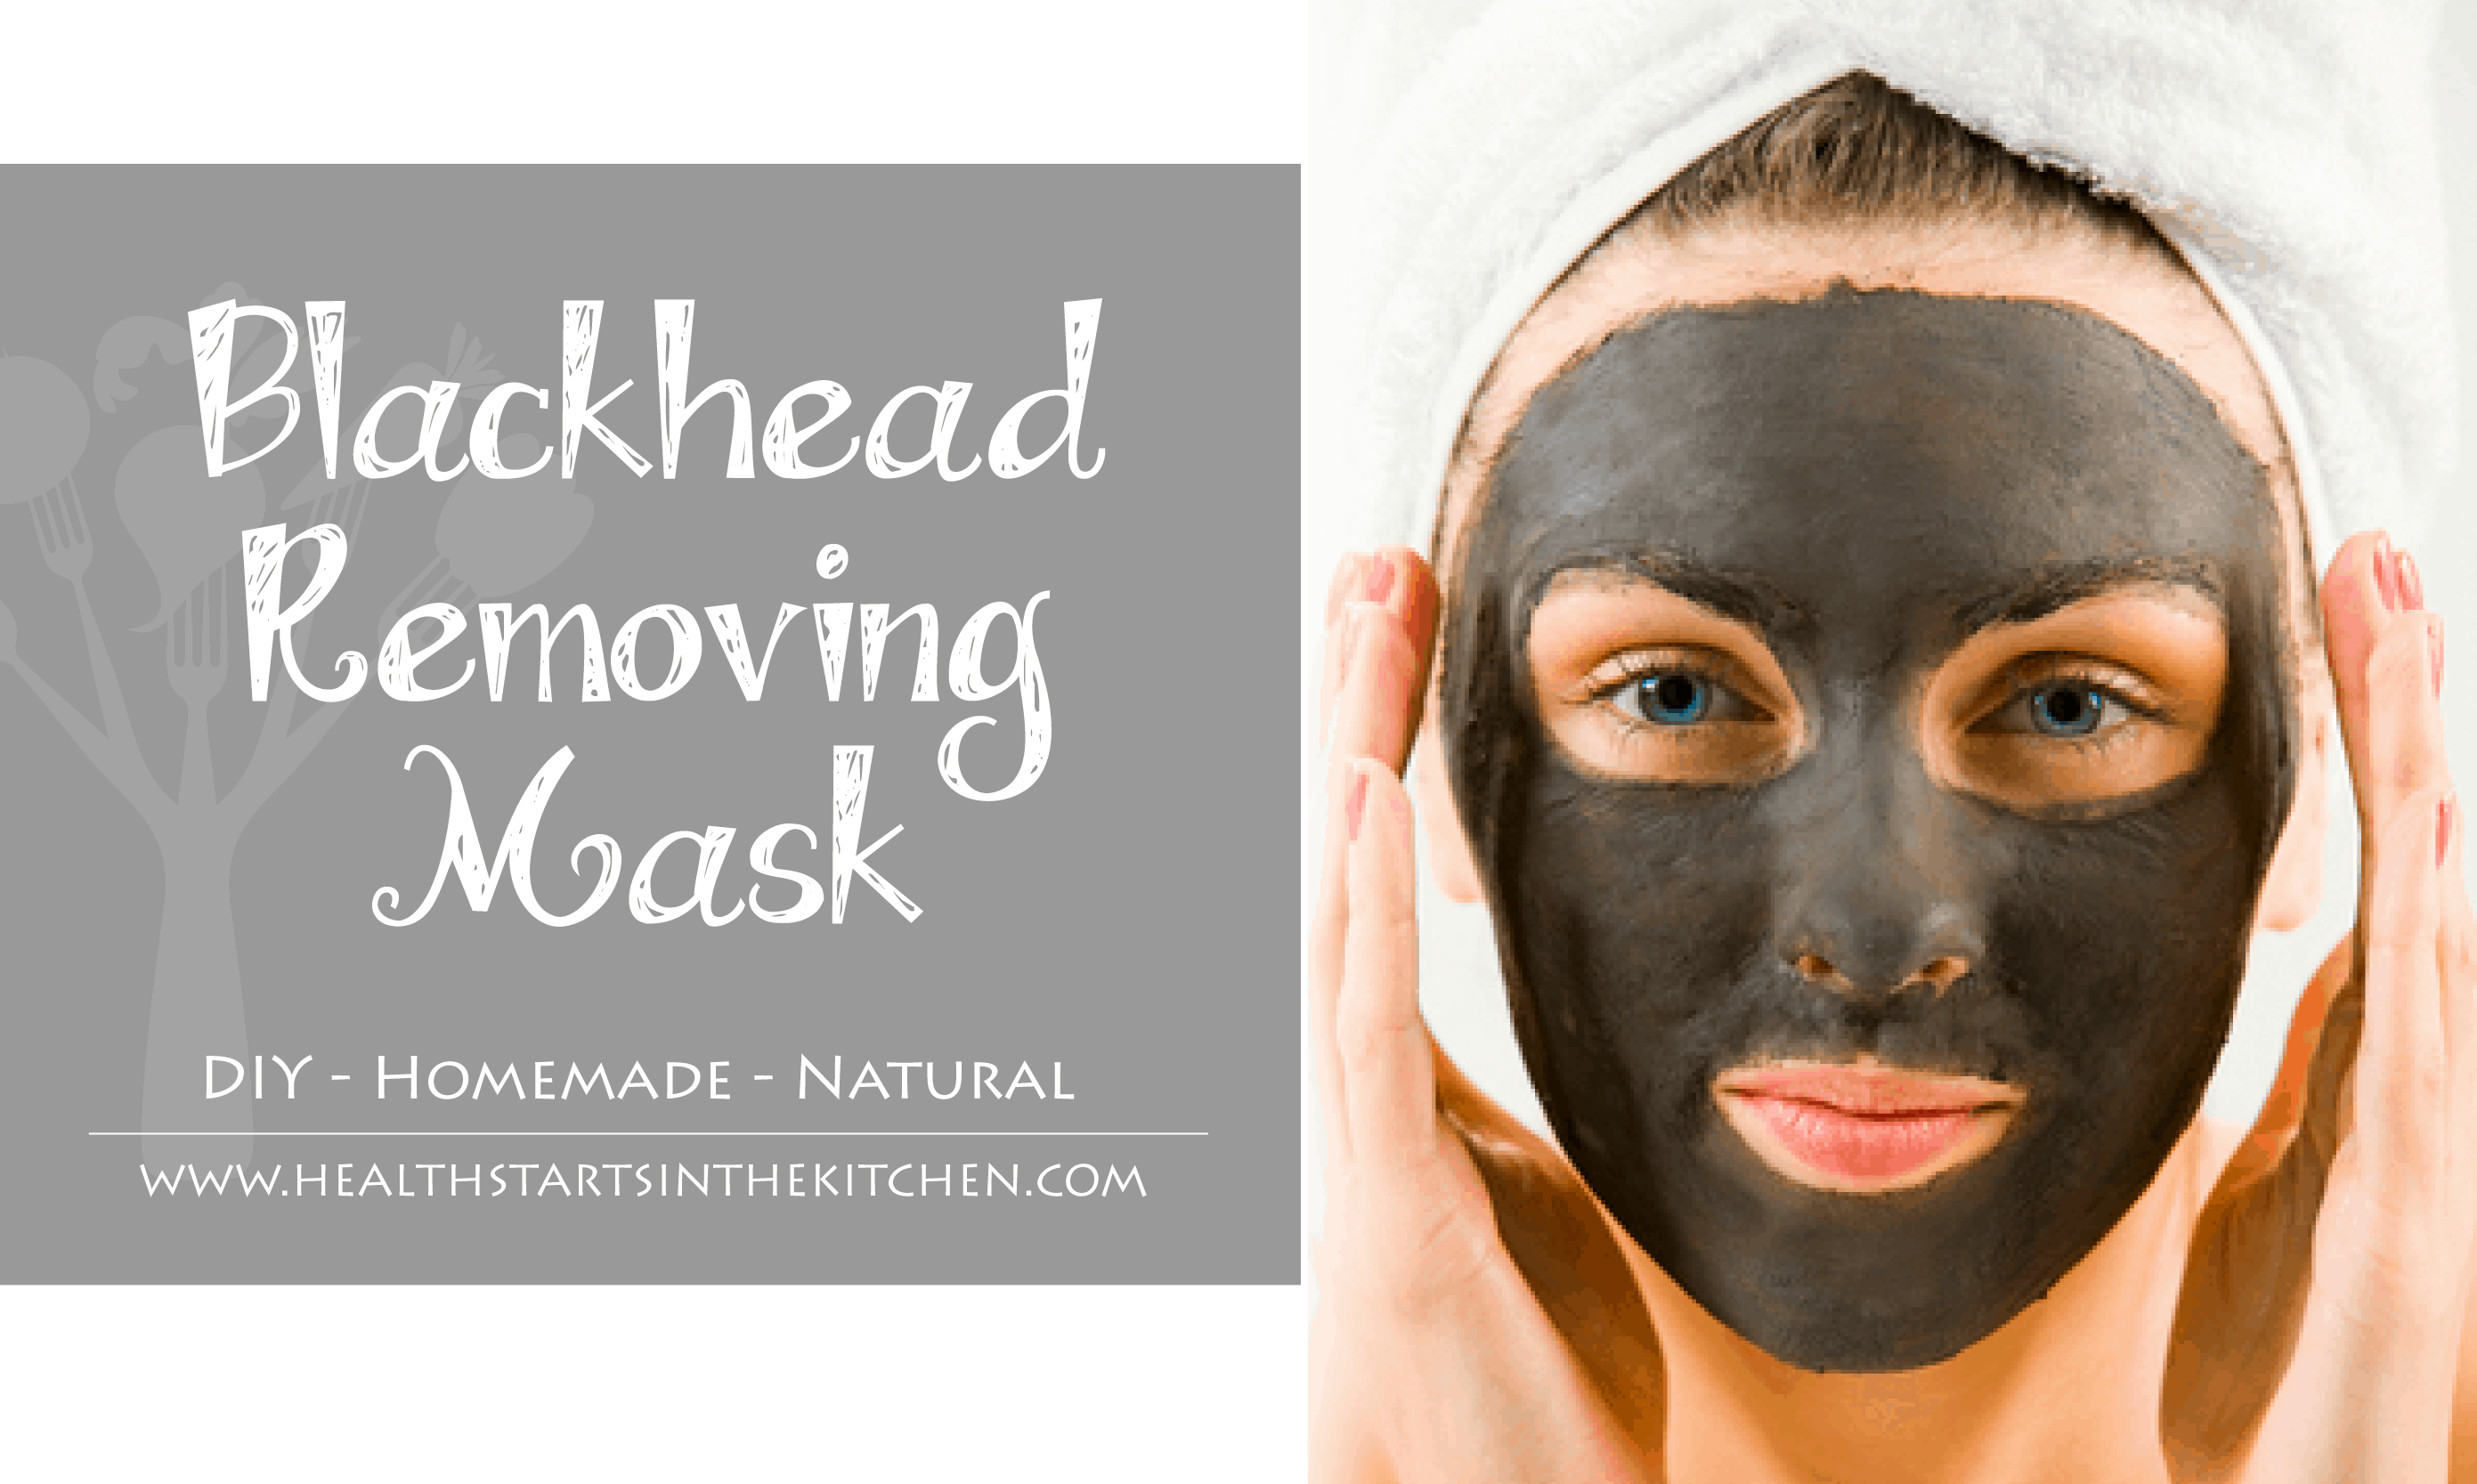 DIY Homemade Blackhead Removing Mask